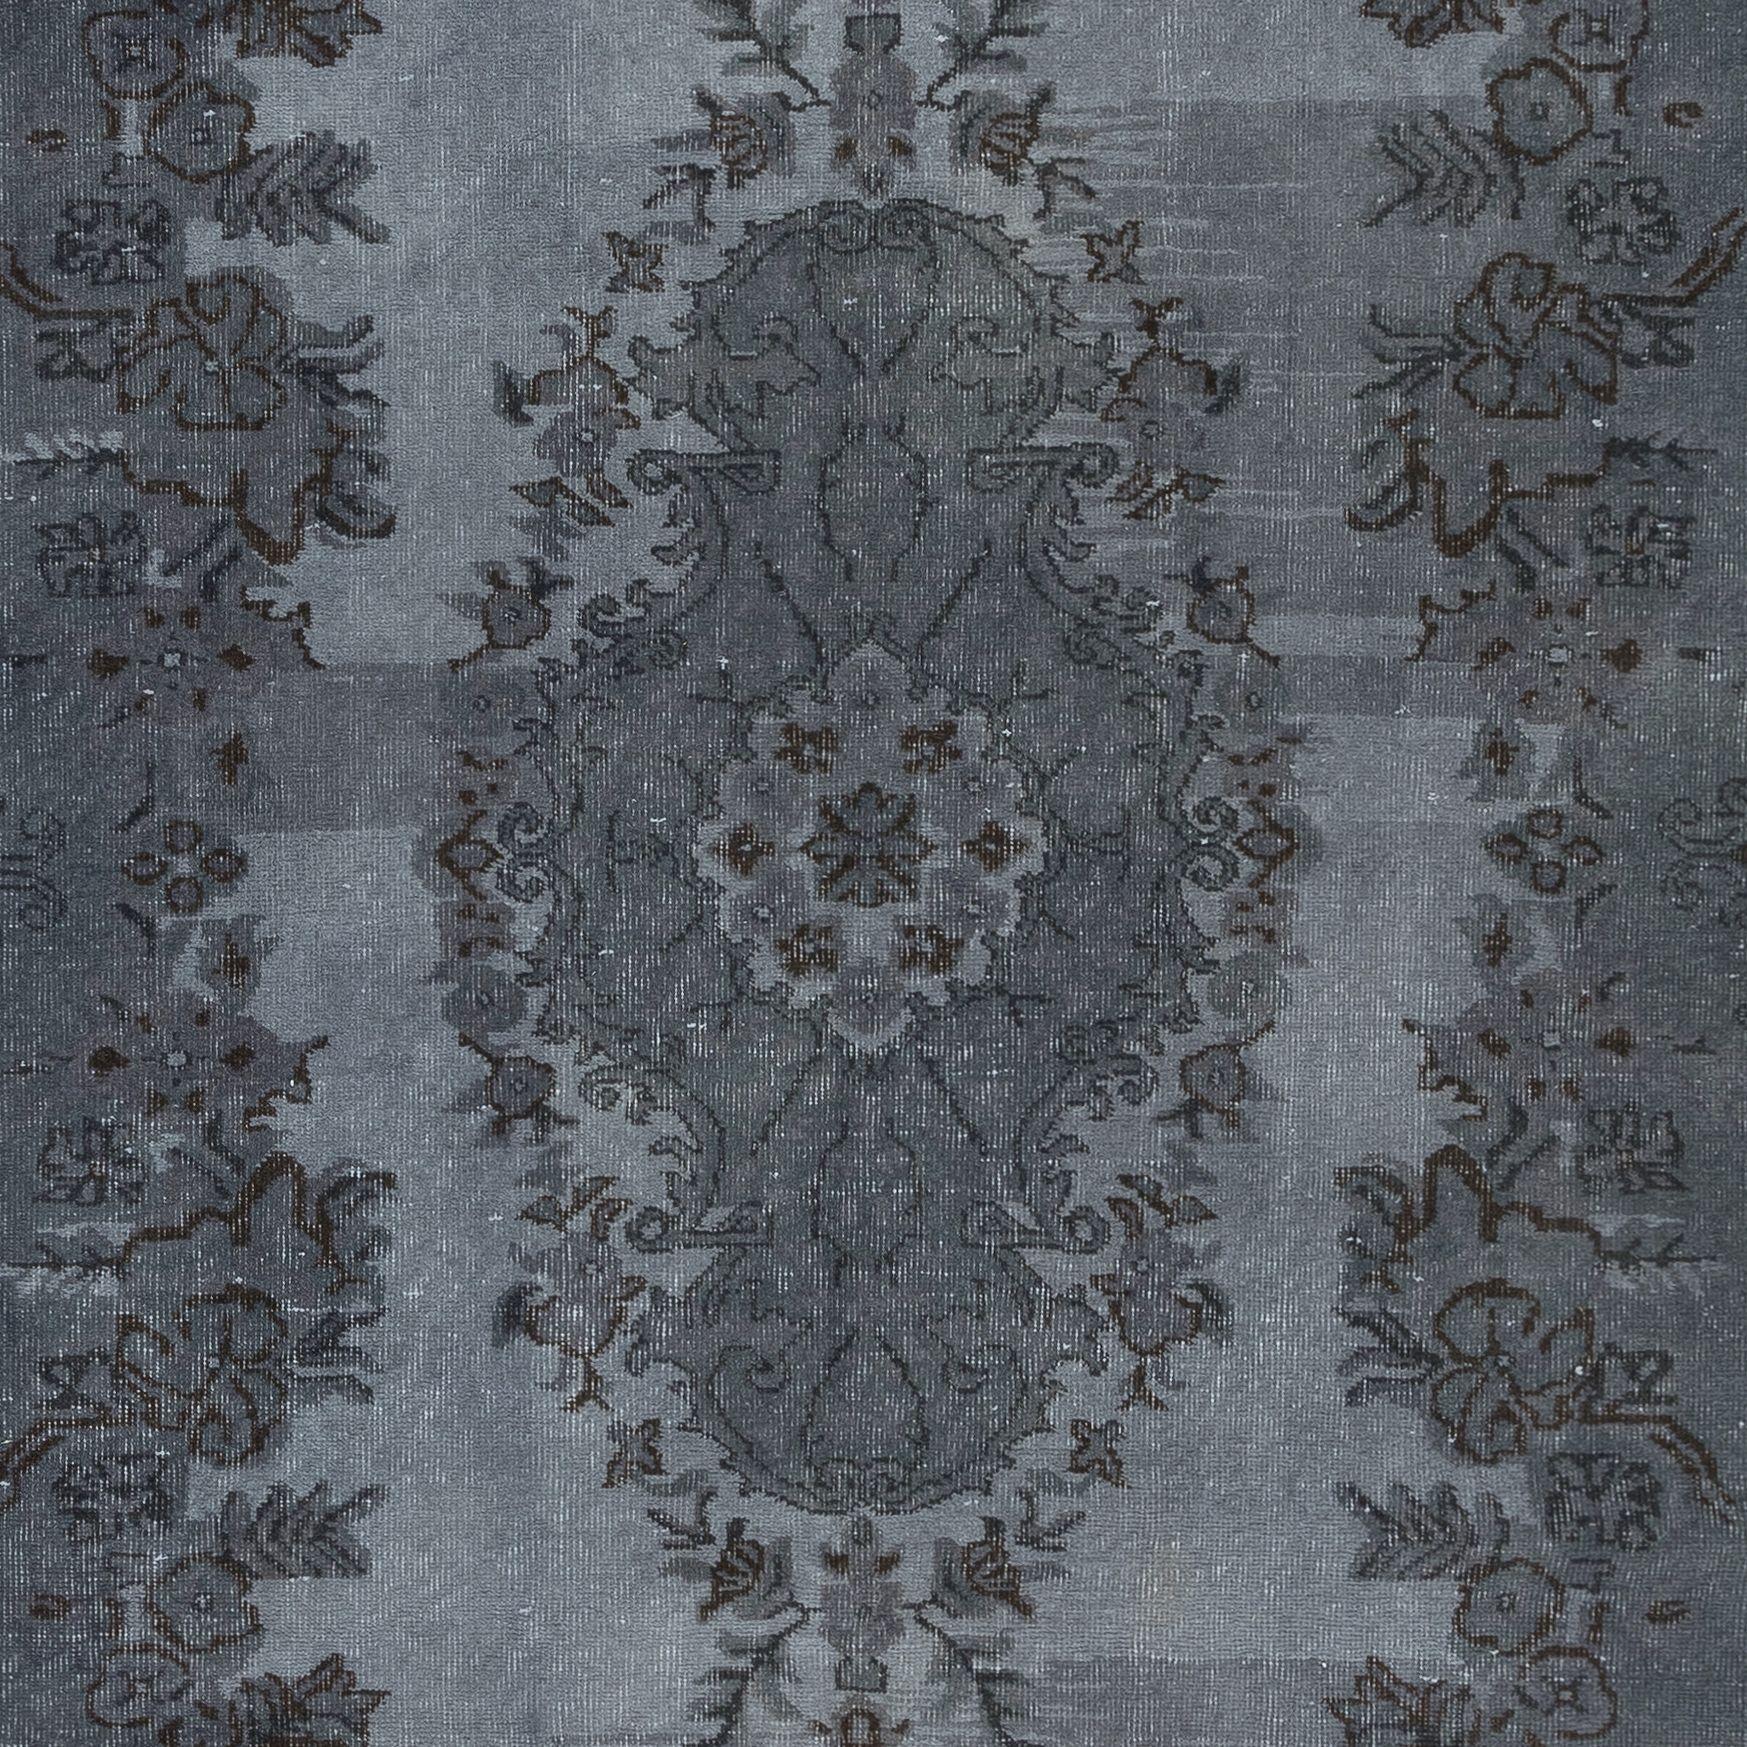 20th Century 6.3x10 Ft Handmade Gray Area Rug with Medallion Design. Modern Turkish Carpet For Sale